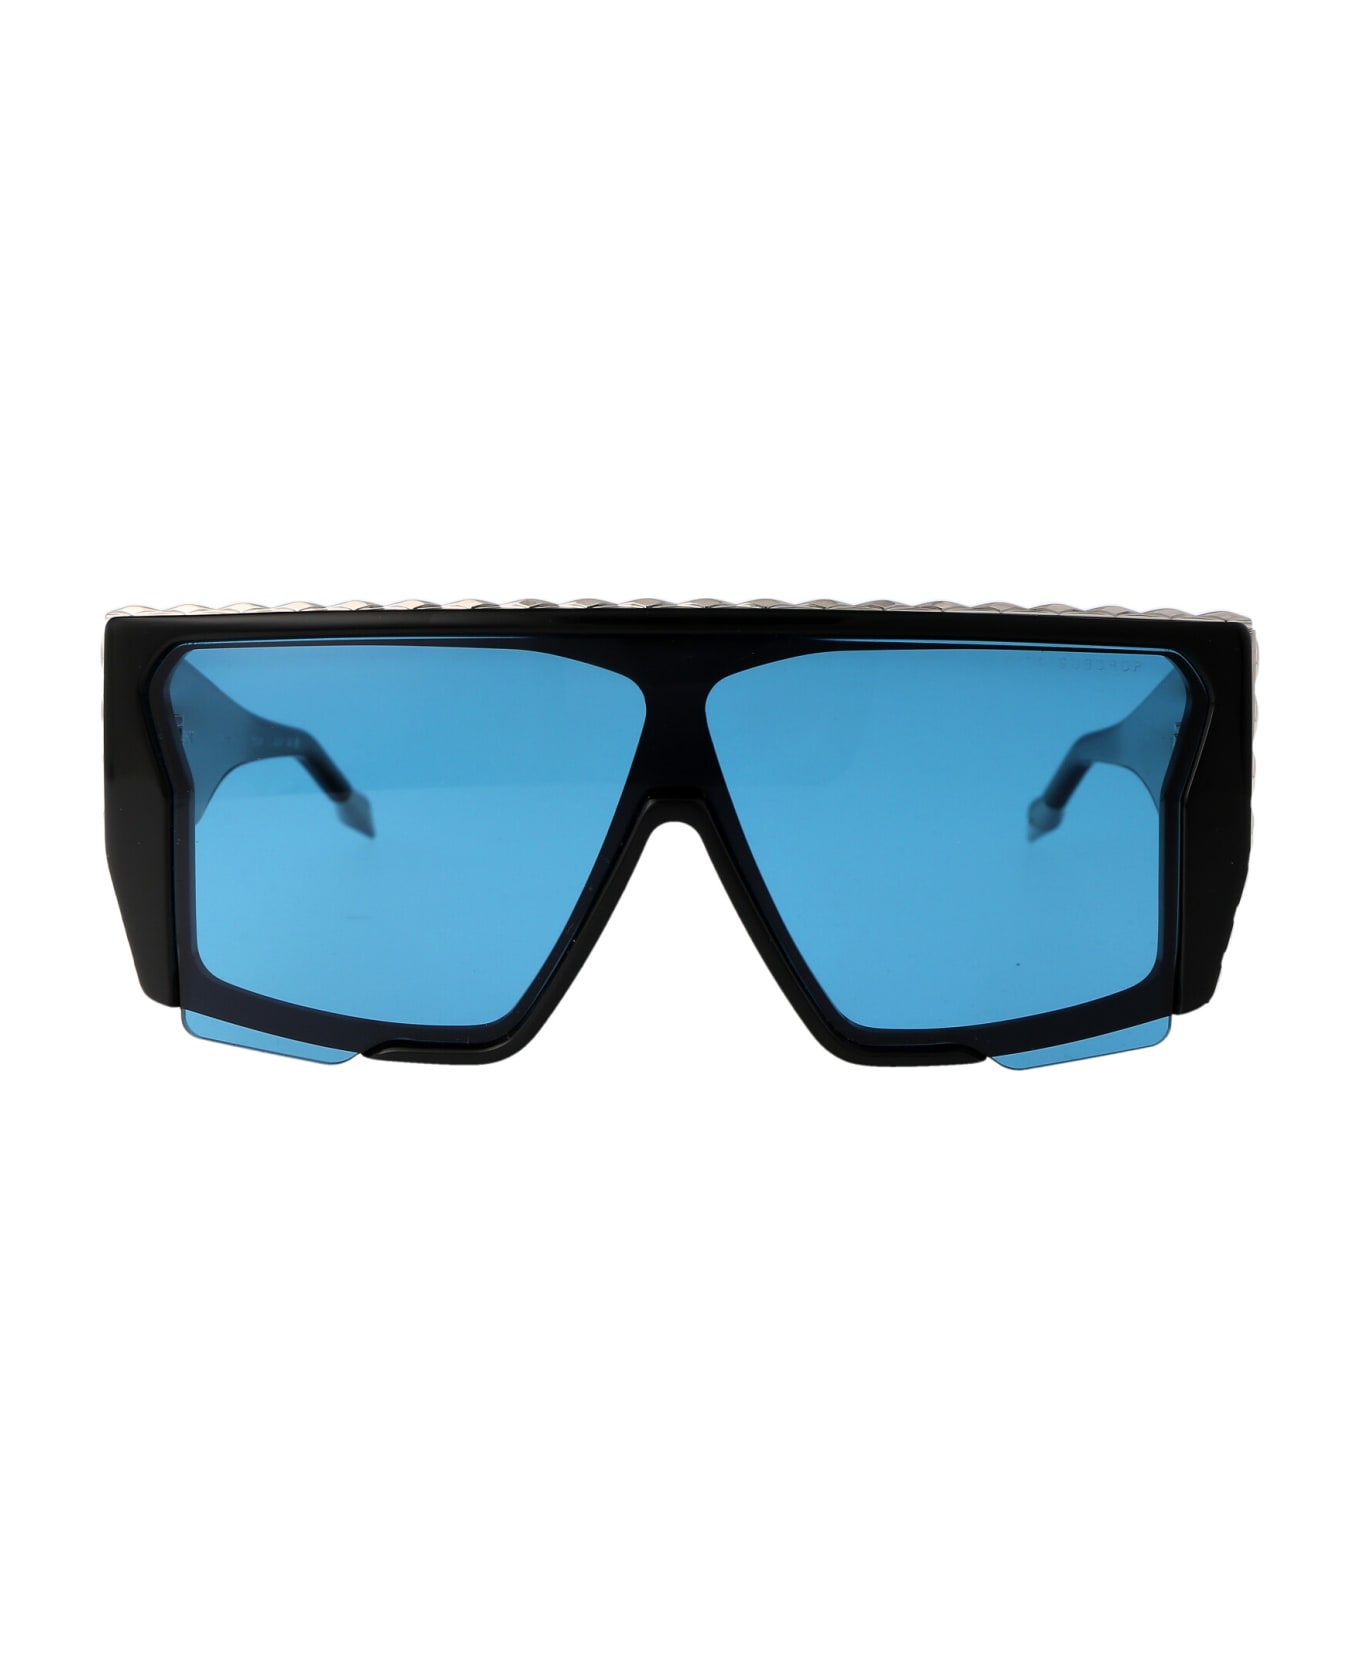 Dita Subdrop Sunglasses - 01 Black - Silver w/ Cobalt Blue